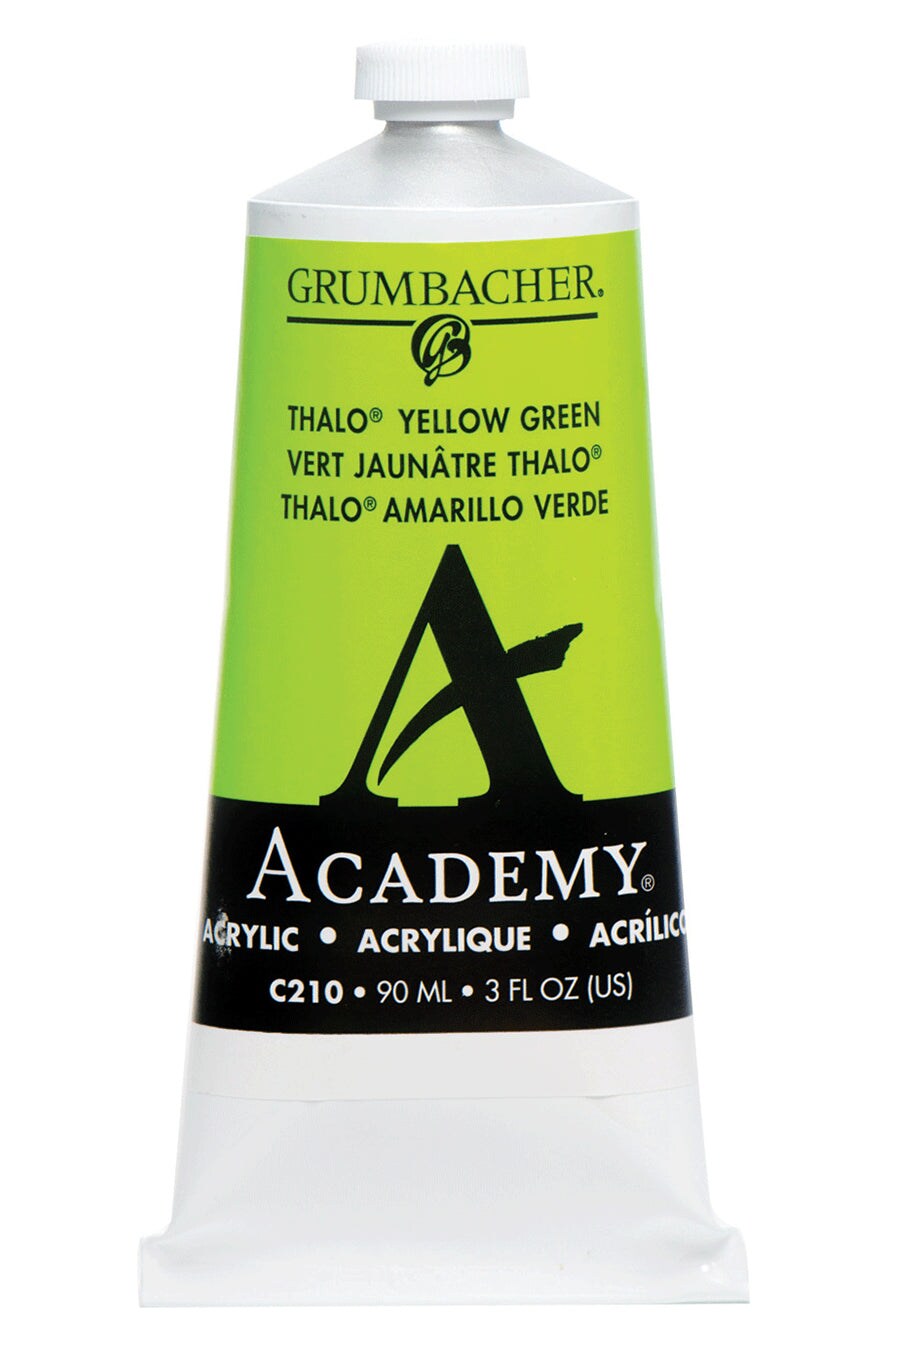 Grumbacher Academy Acrylic - Grumbacher Art